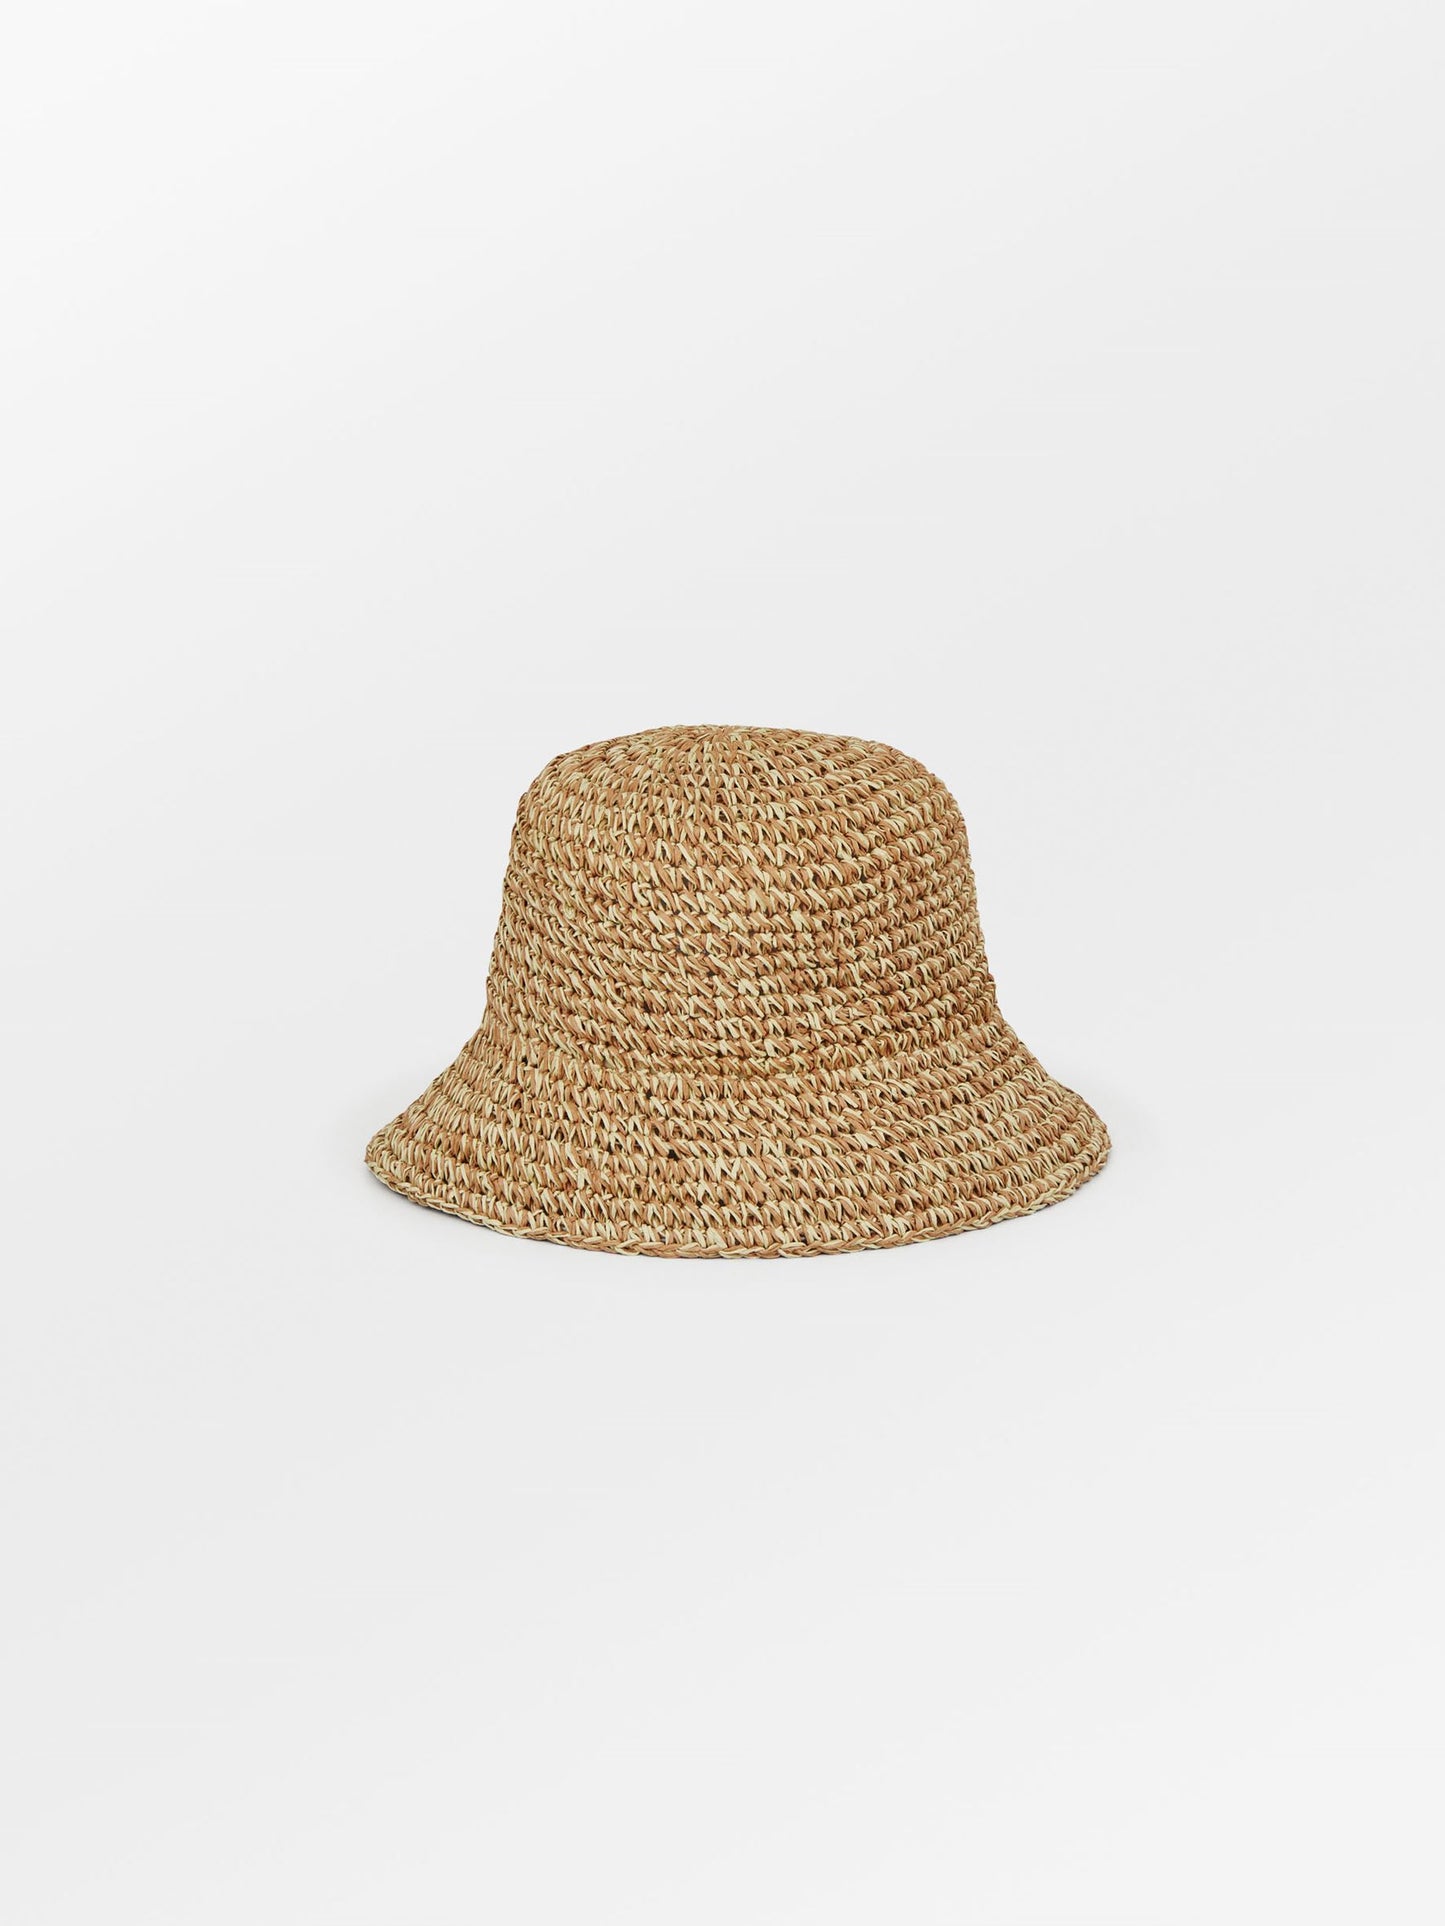 Florio Bell Bucket Hat - Natur Clothing Becksöndergaard.dk   